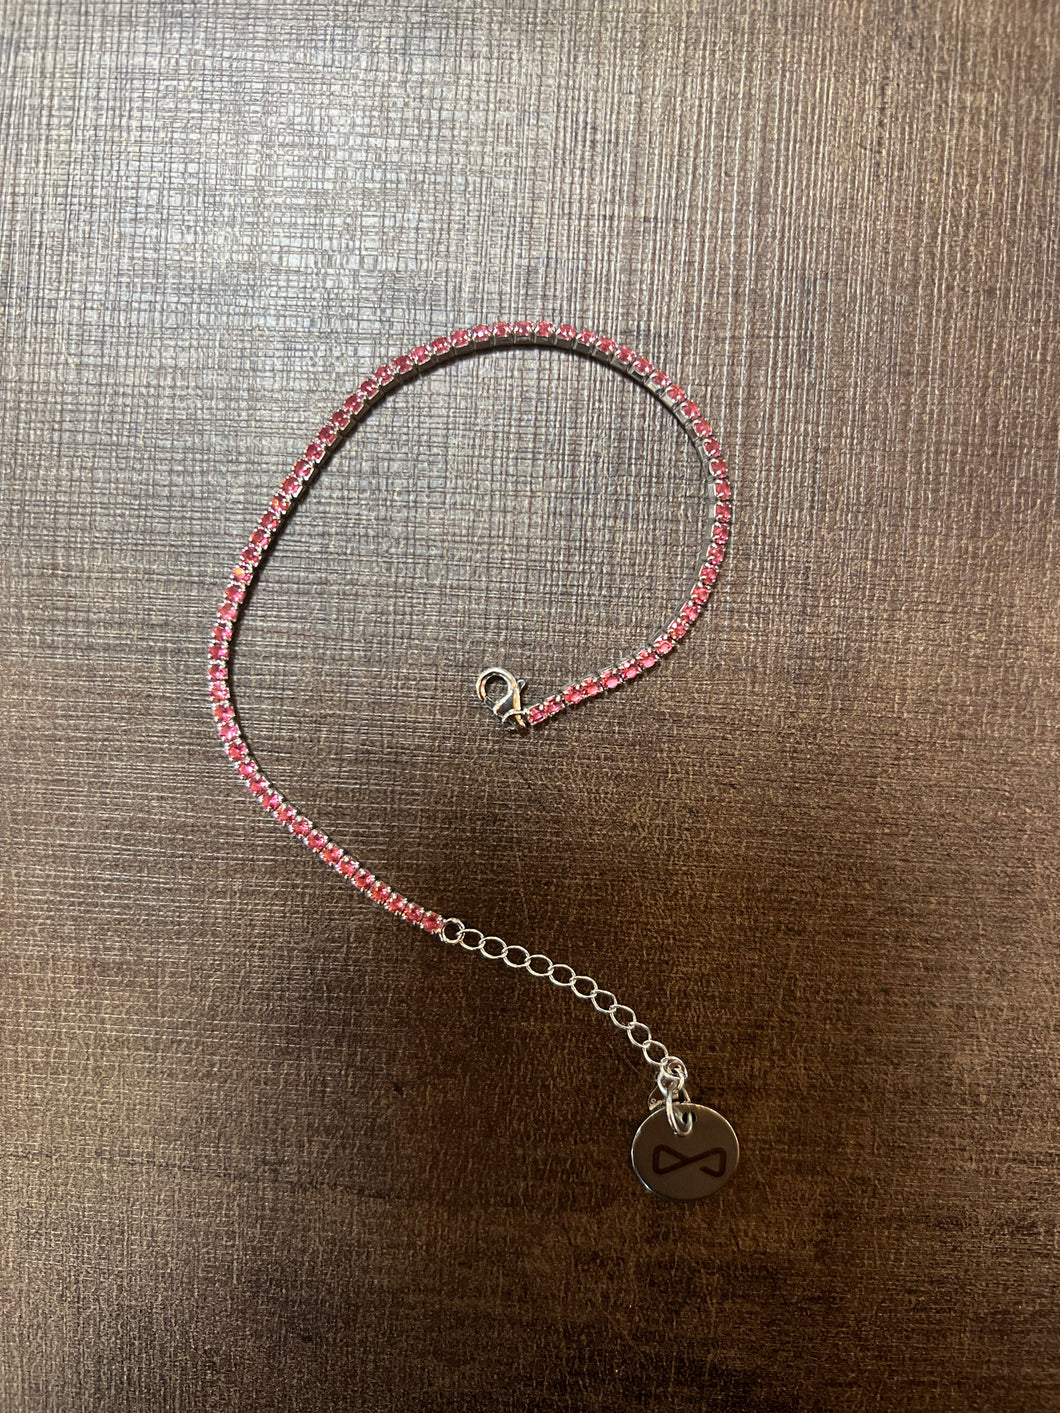 Silver 925 Bracelet with pendant logo and purple stones